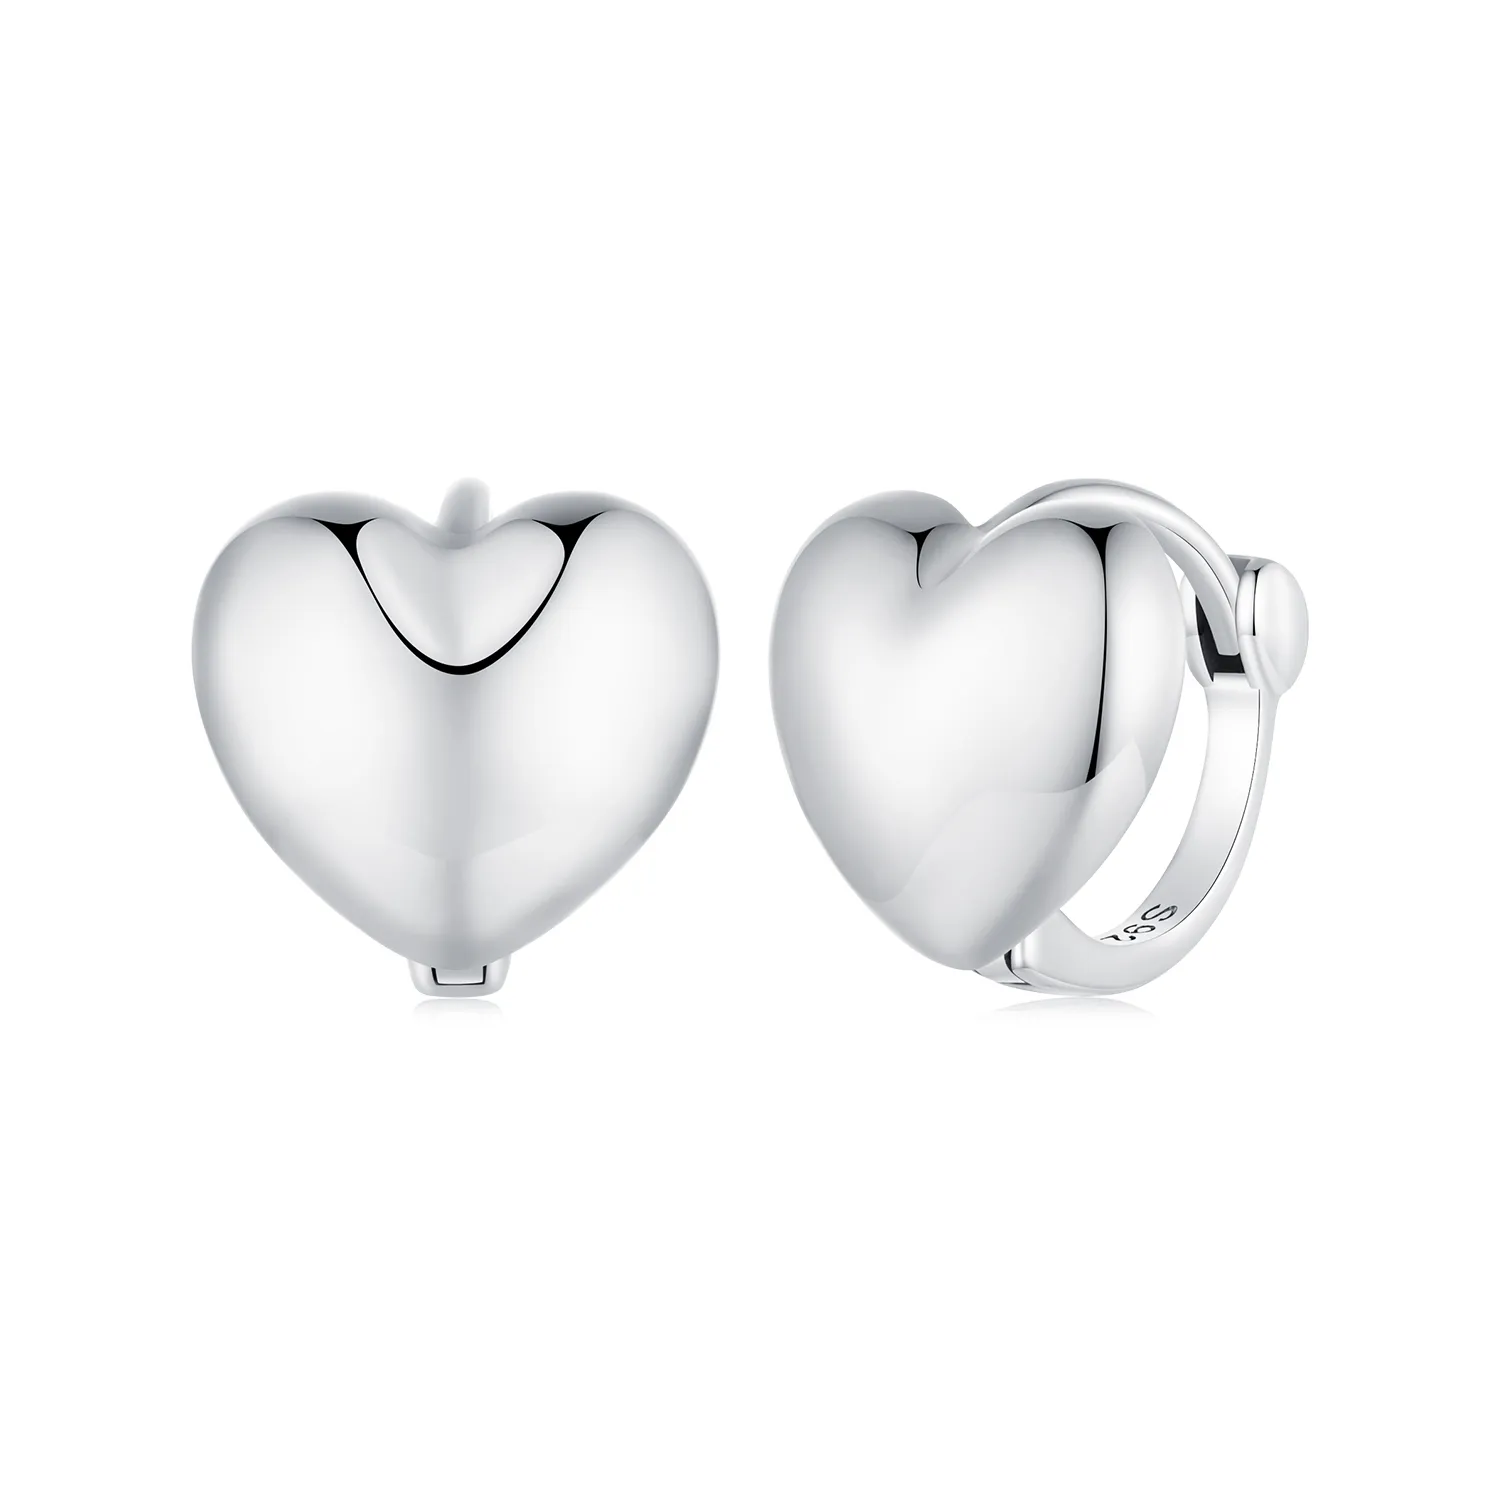 Pandora Style Heart-Shaped Hoop Earrings - BSE905